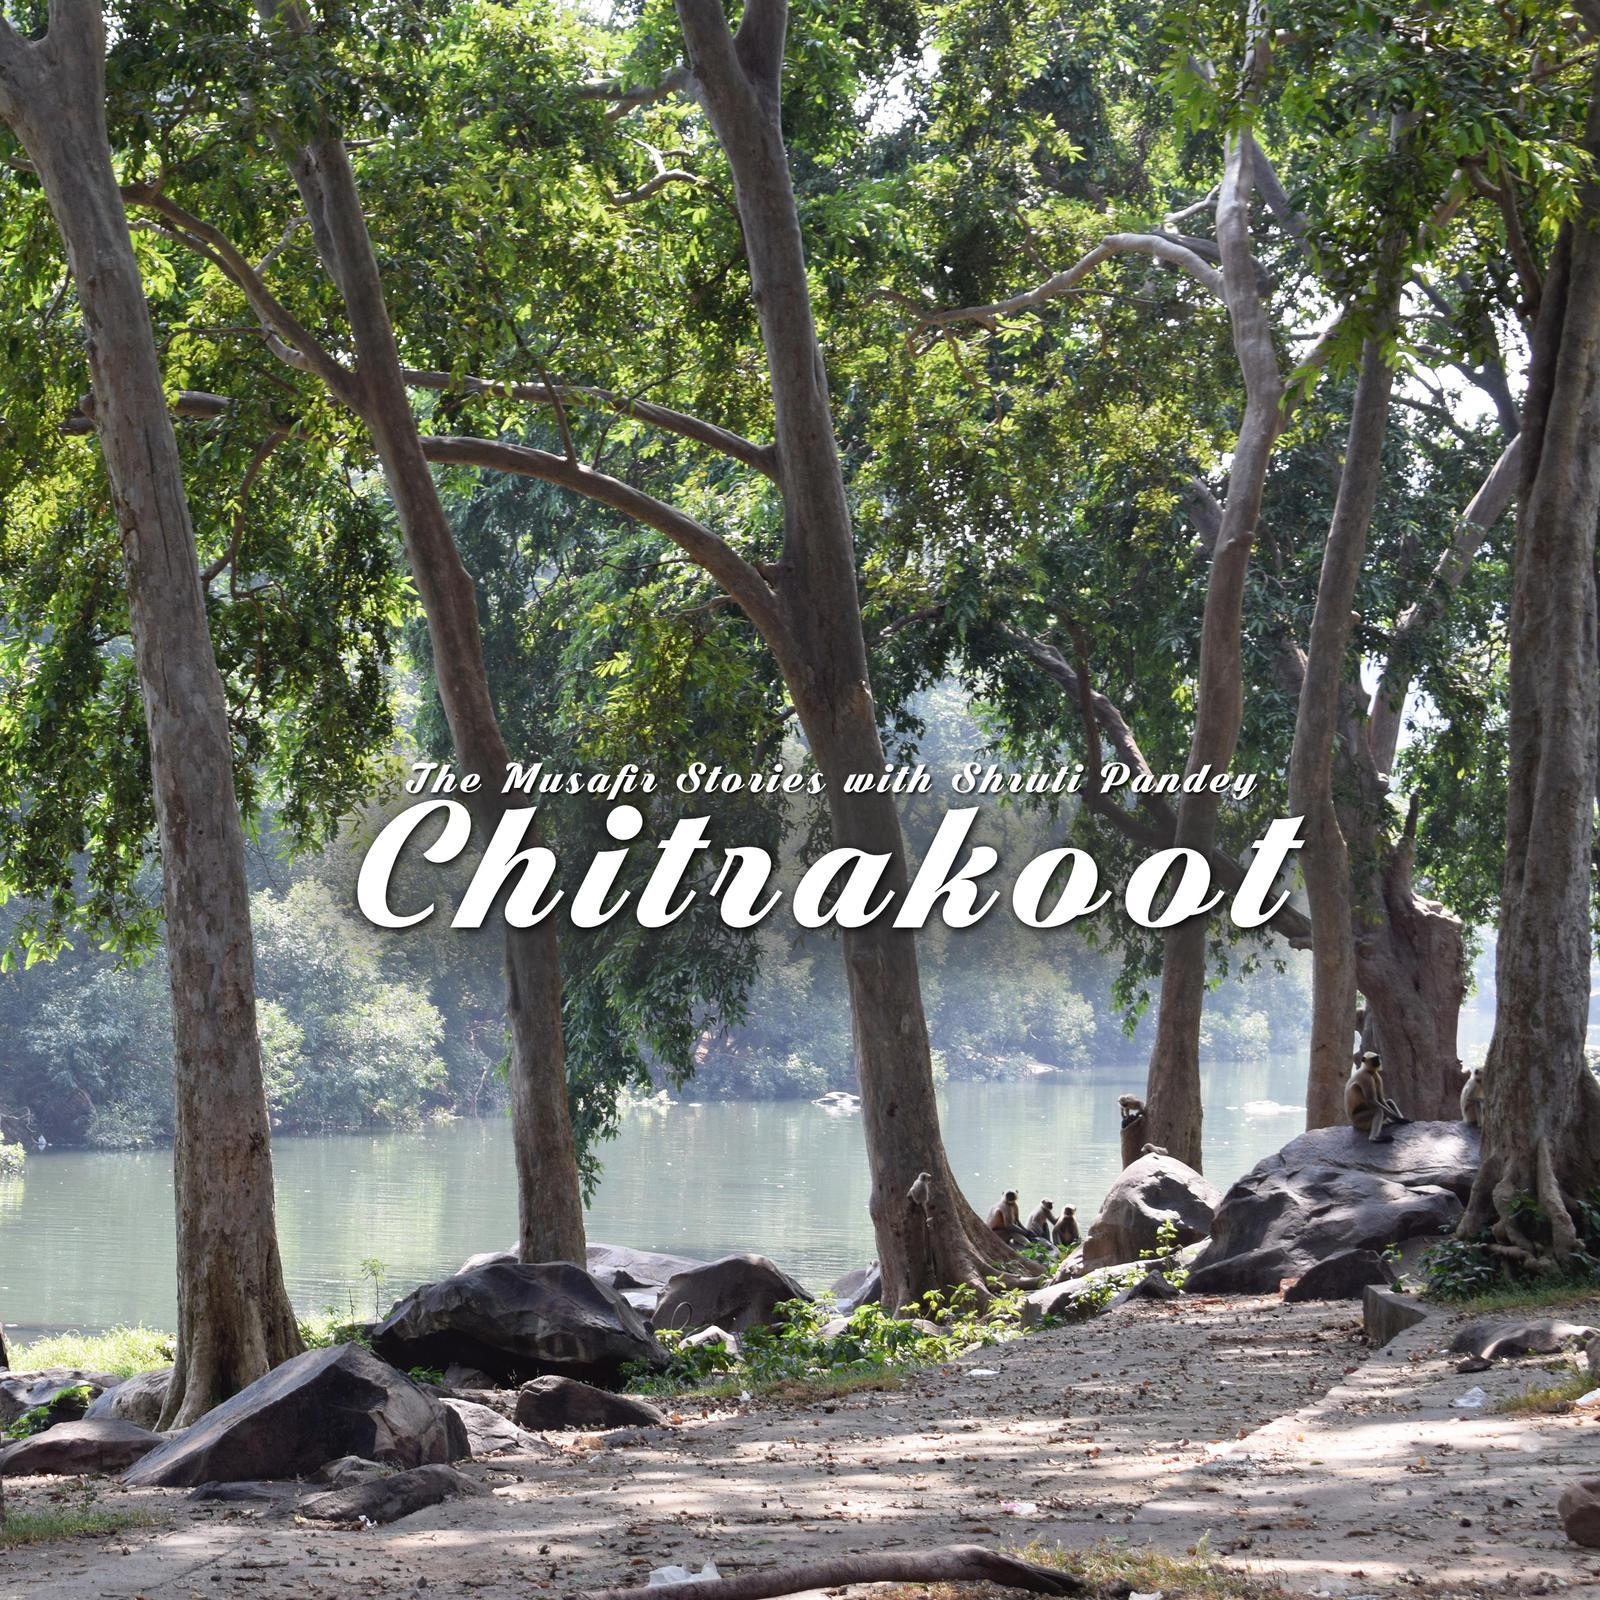 97: Chitrakoot with Shruti Pandey